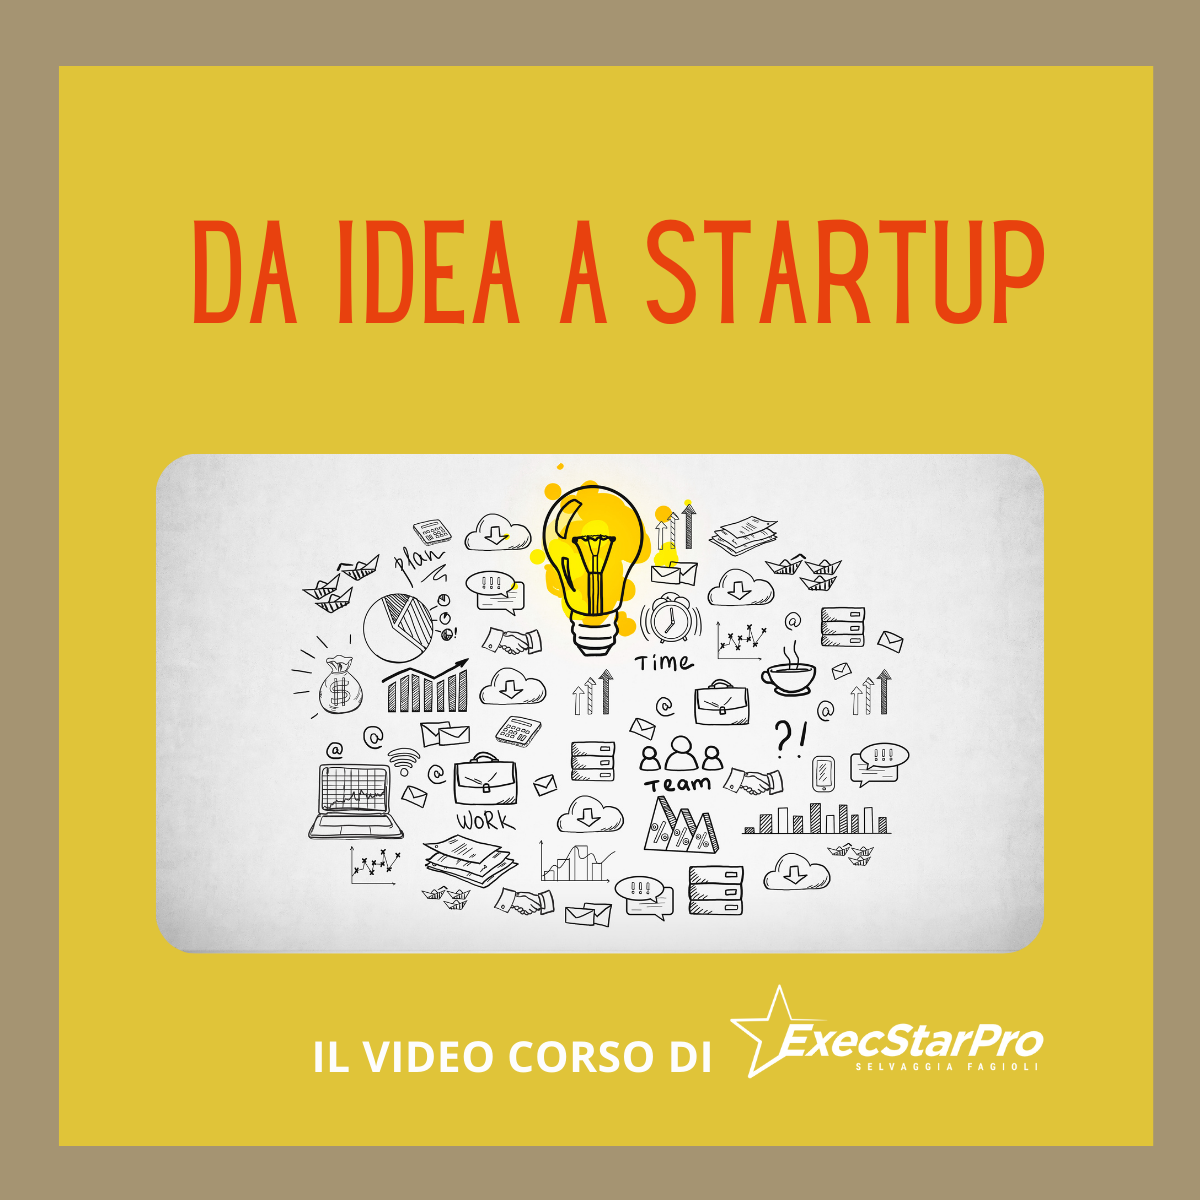 video corsa da idea a startup